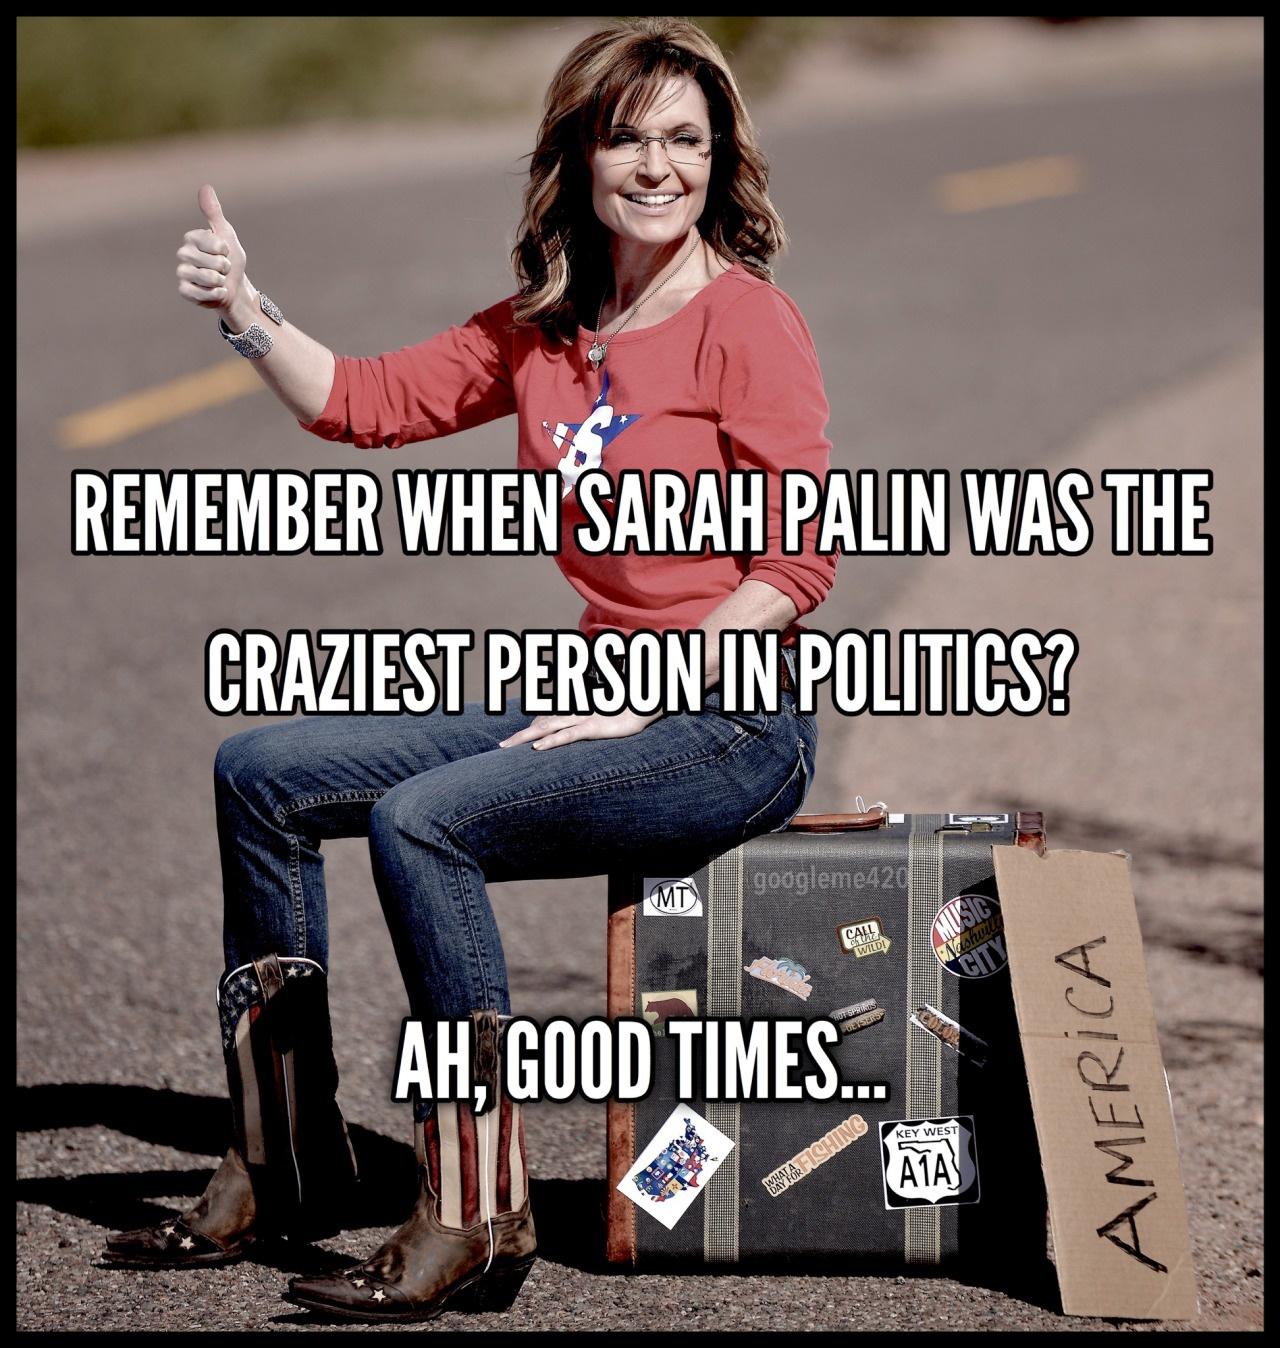 sarah palin alaska governor - wa Remember When Sarah Palin Was The Craziest Person In Politics? googleme420 Mt Call Music Wildl Nahuel City Ah, Good Times... America Key West Ata Wwa Fishing